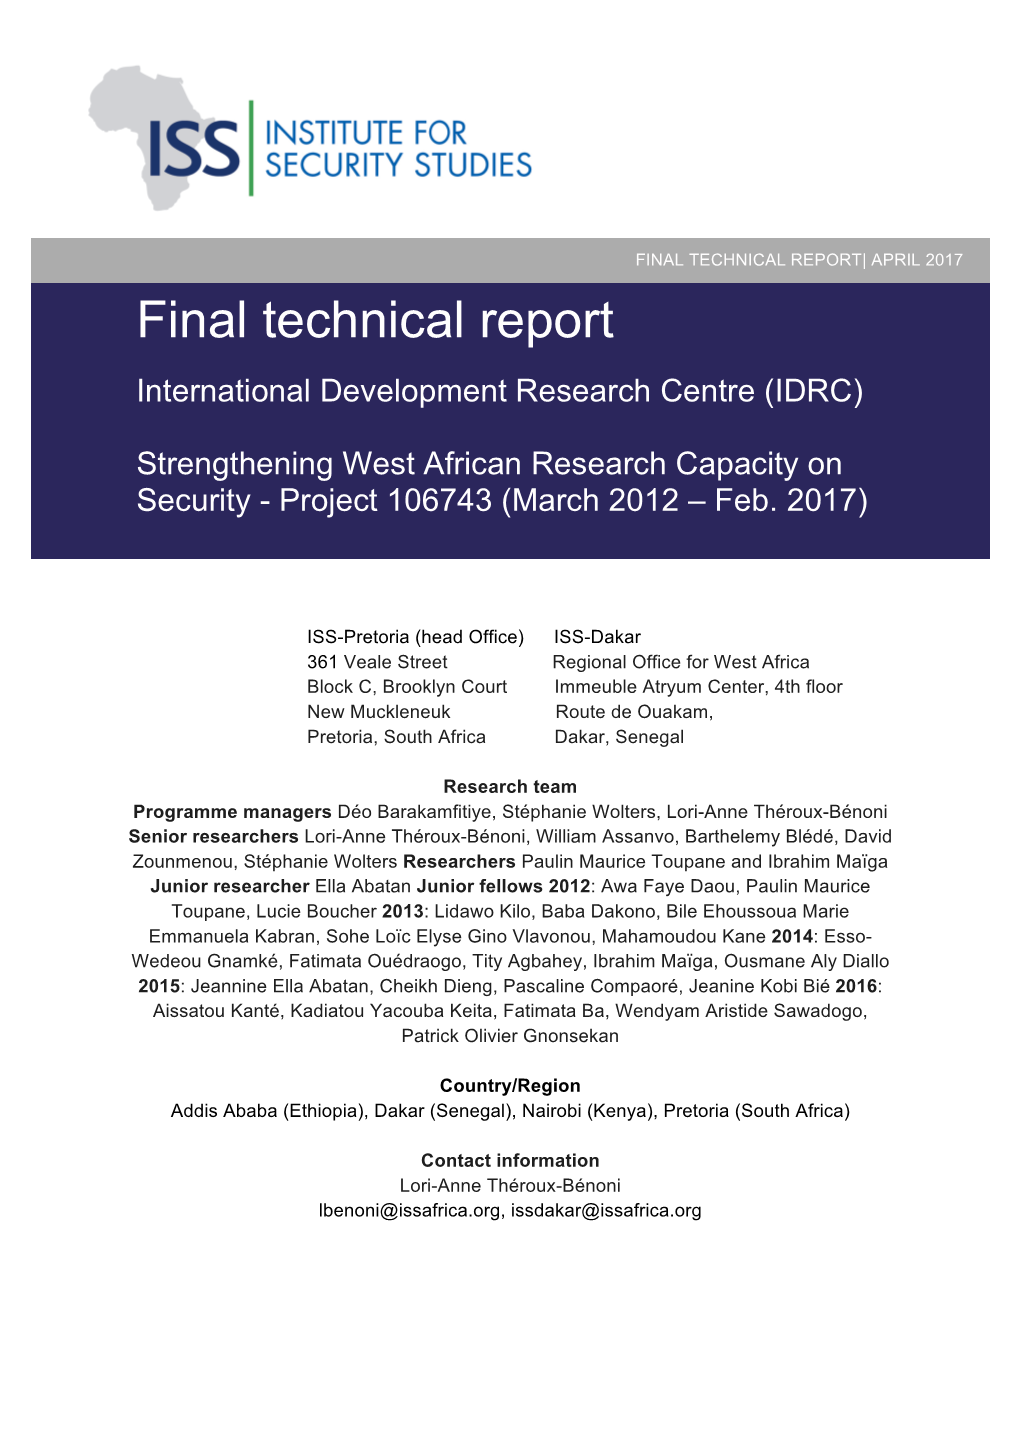 Final Technical Report| April 2017